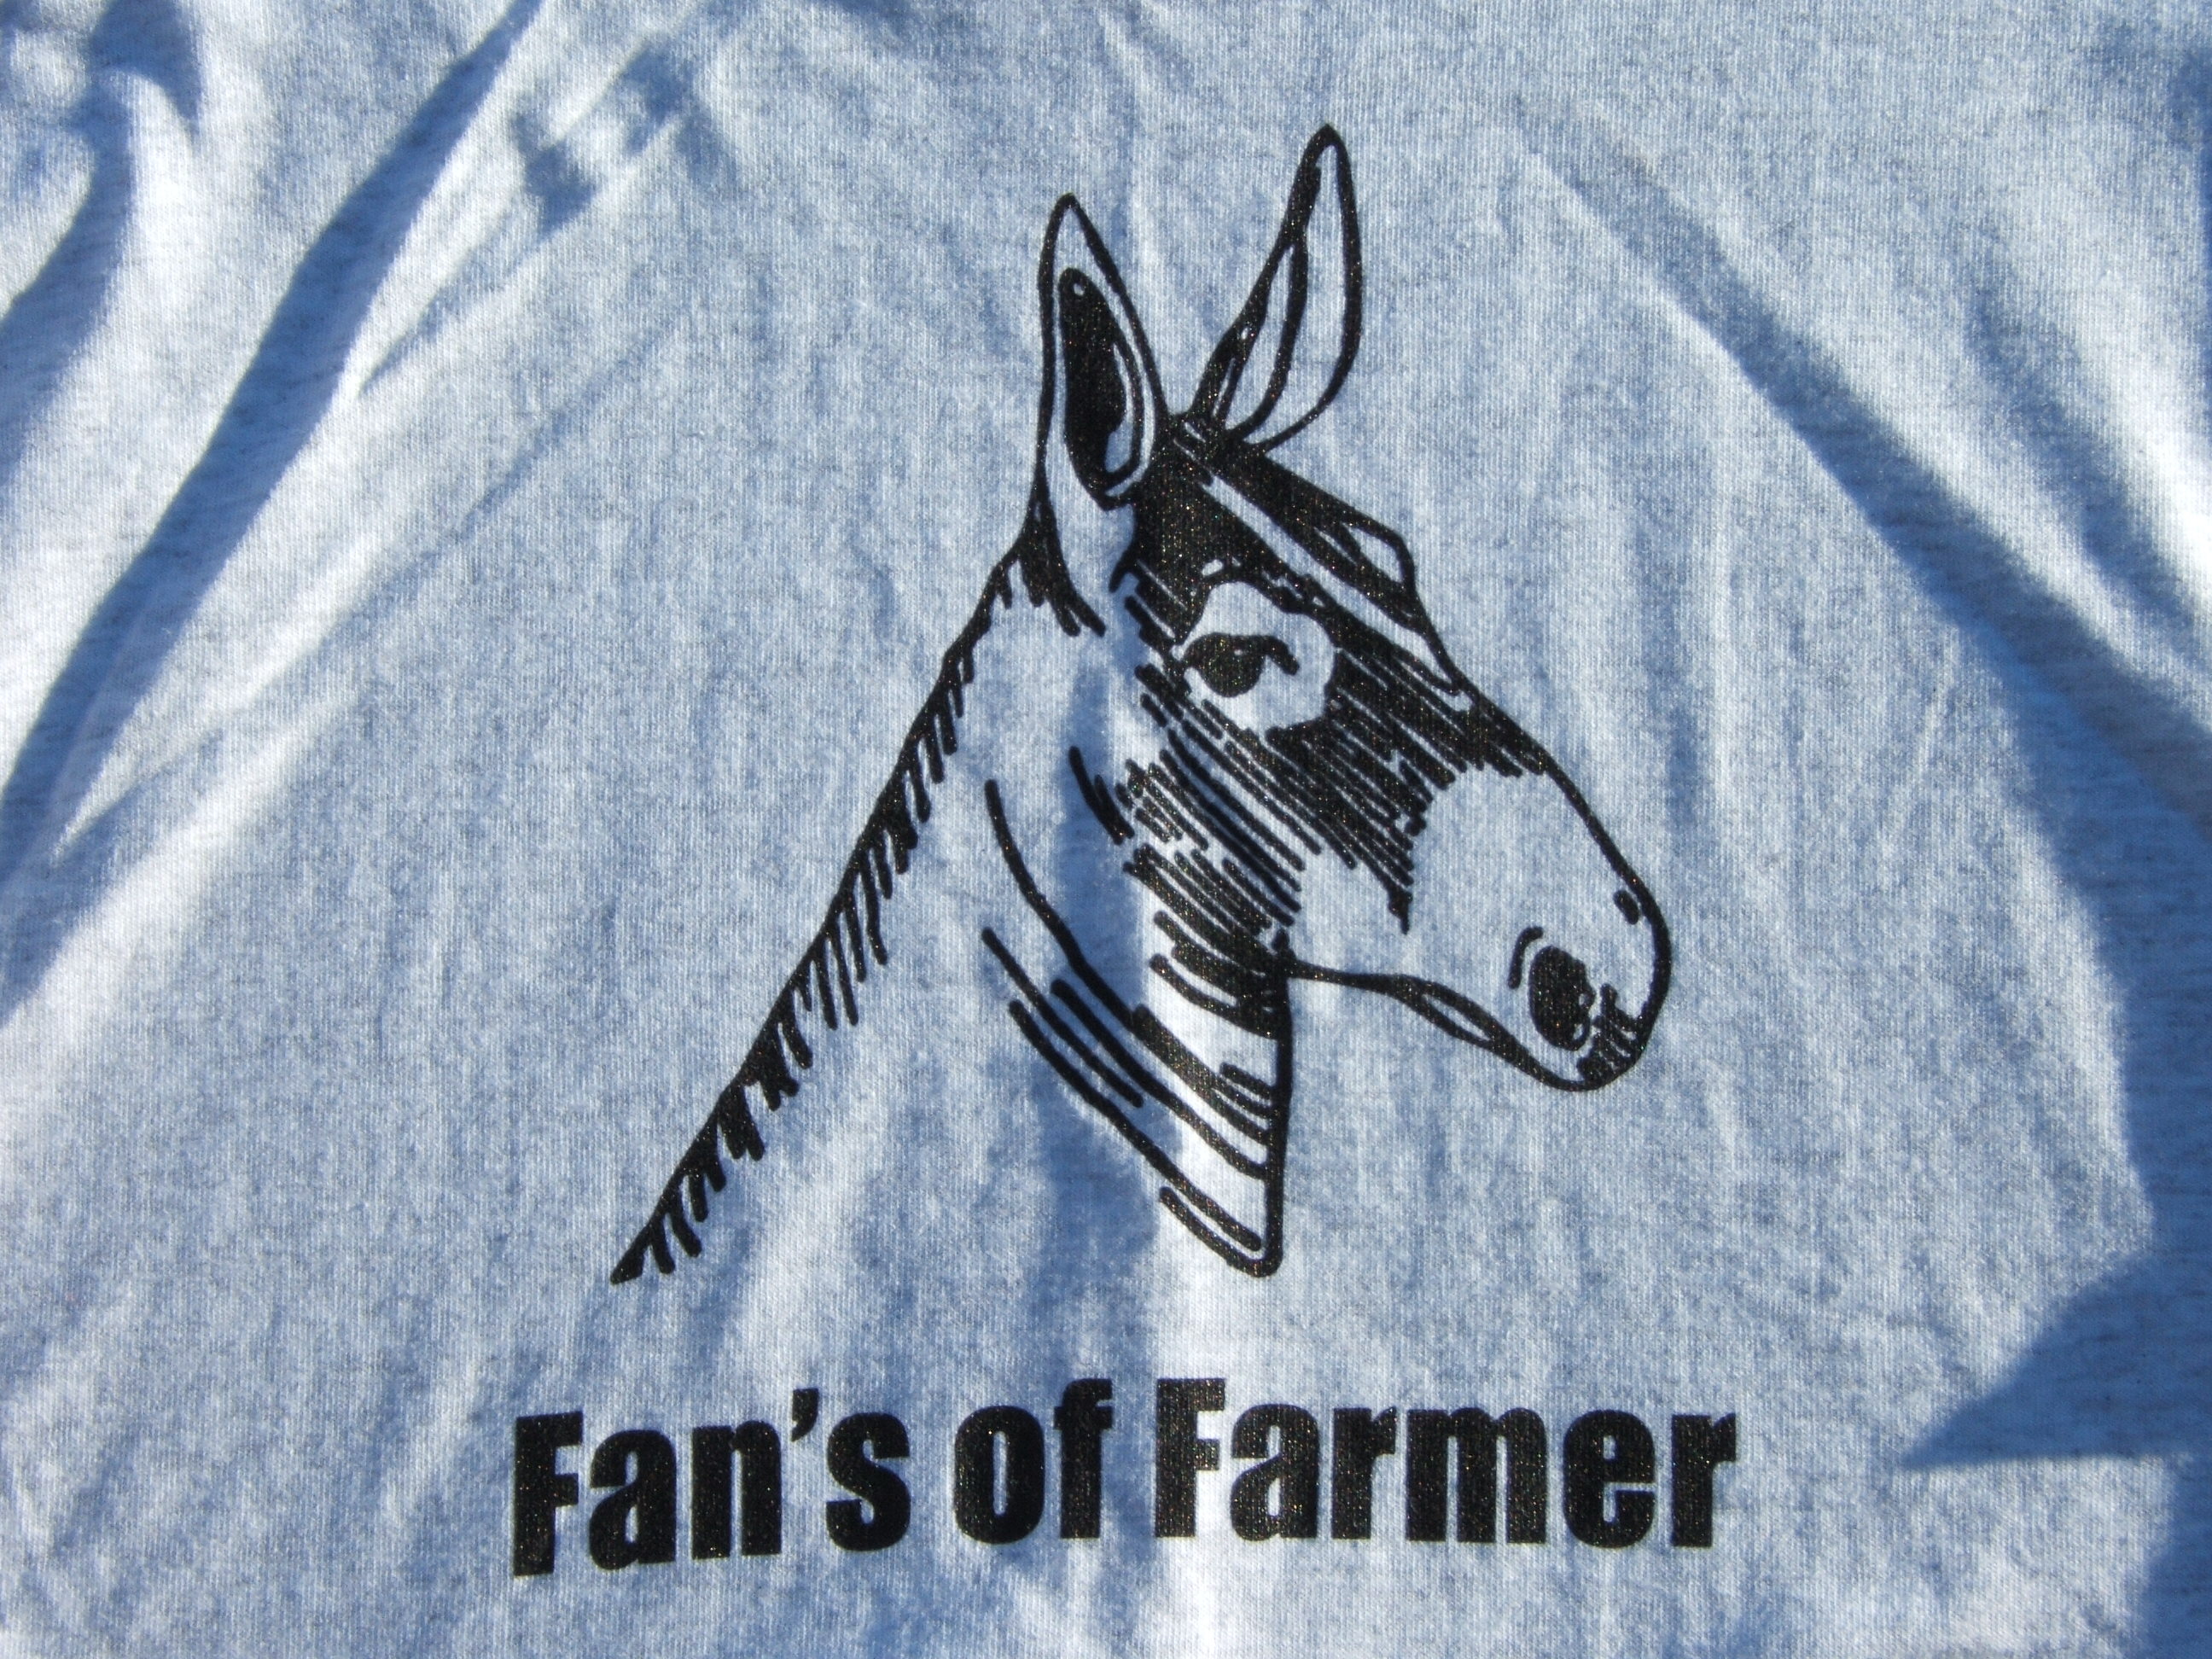 Farmer shirt